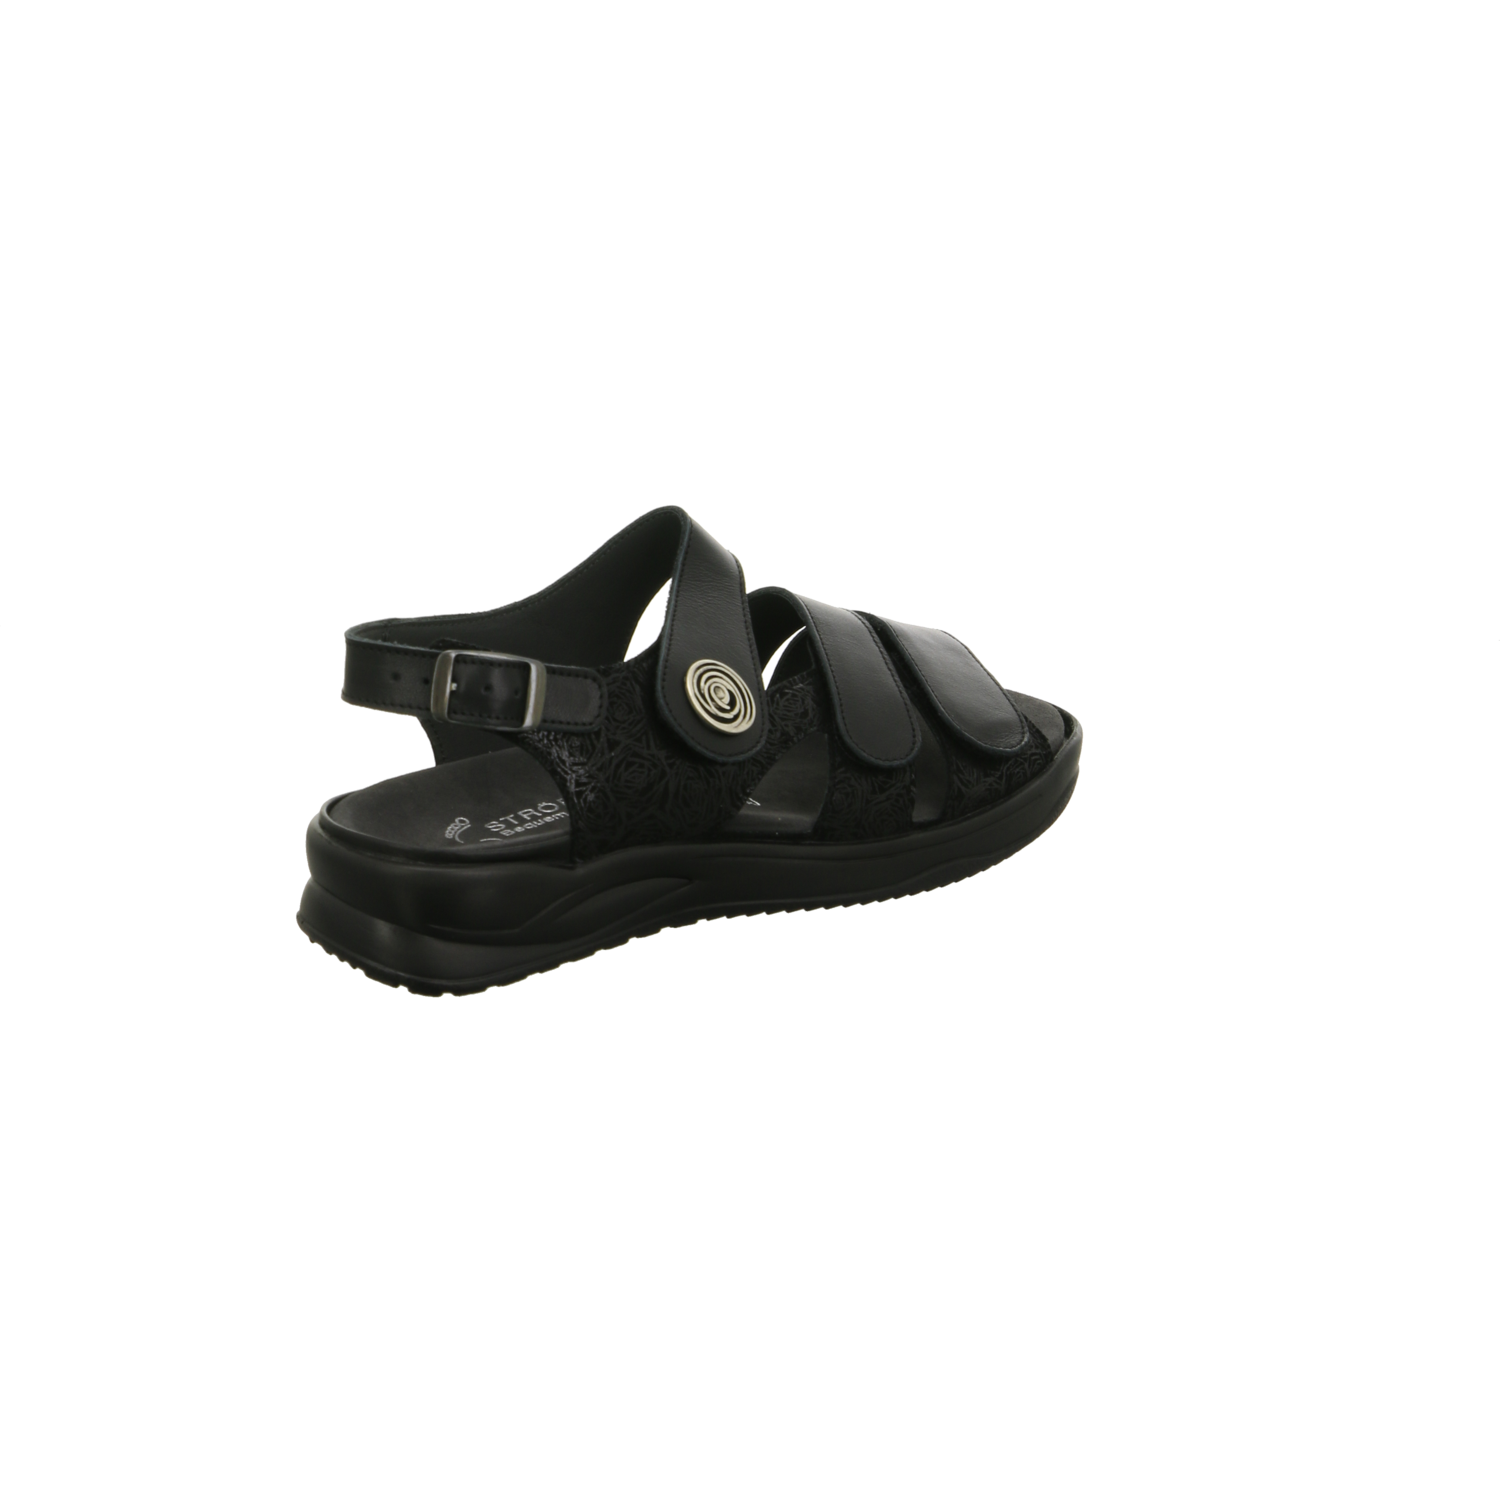 Ströber Comfort-Sandalette schwarz